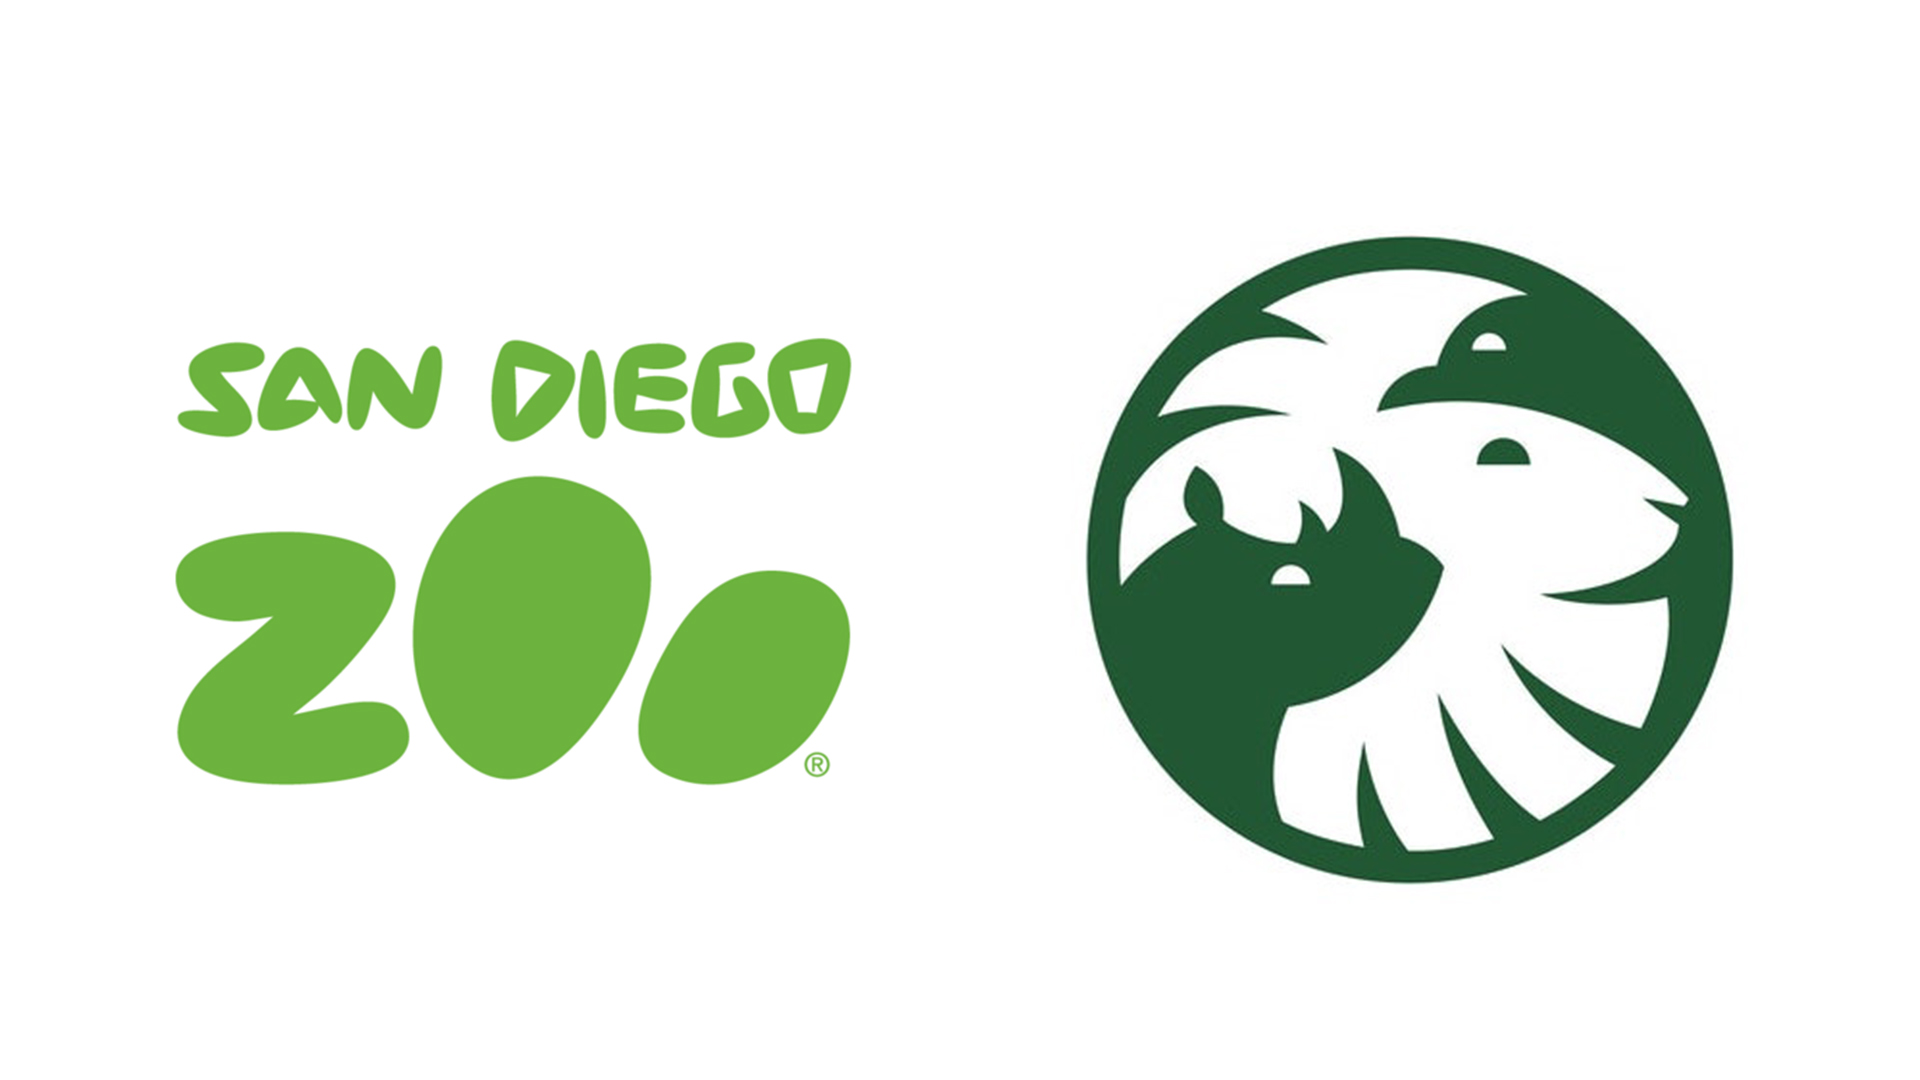 Ingenious new San Diego Zoo logo will make you look twice Creative Bloq